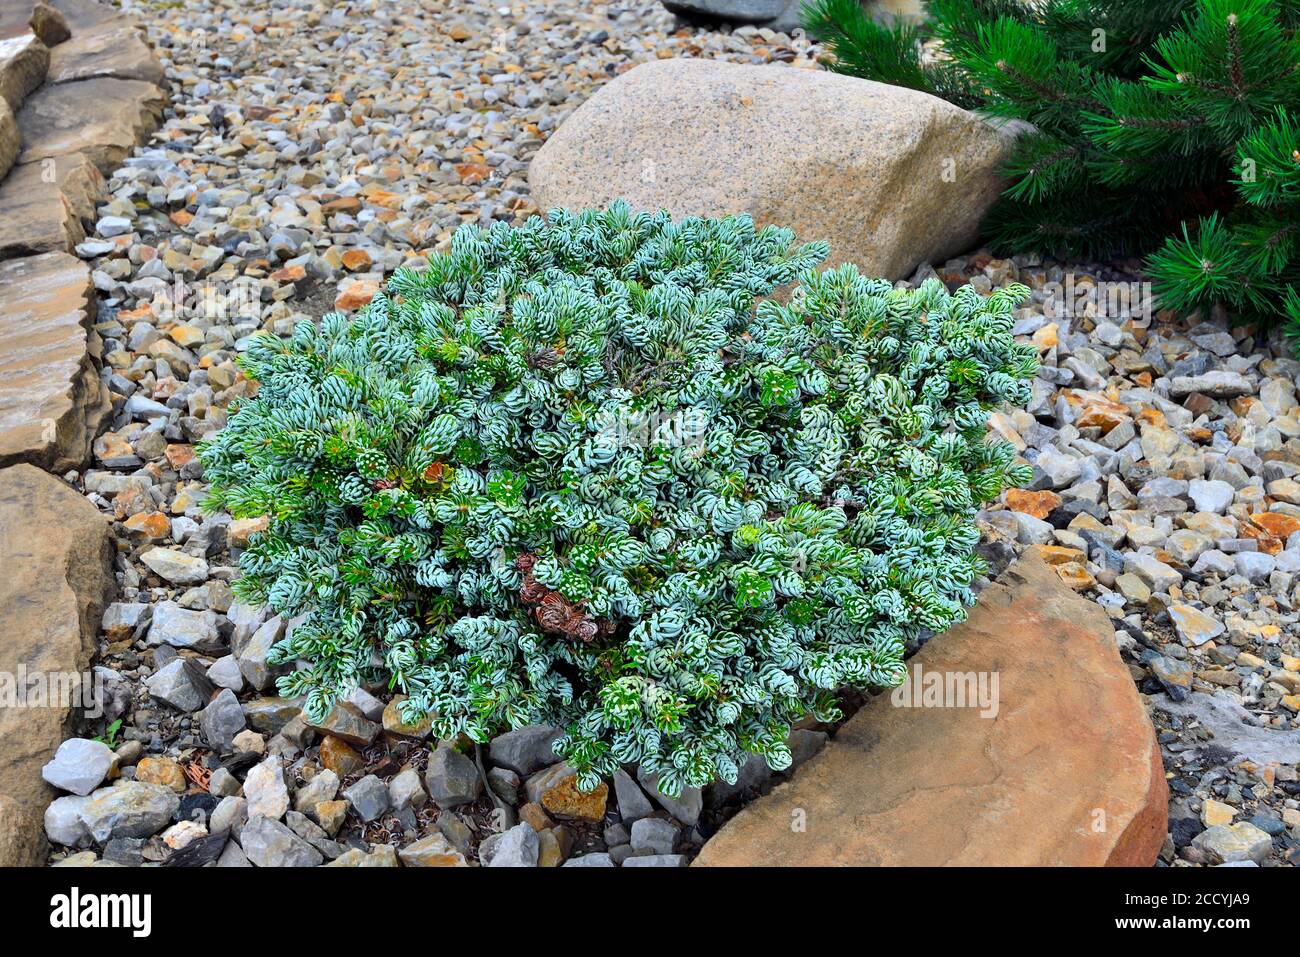 Dwarf sempreverde pianta di conifere Coreano Fir 'Kohouts Icebreaker' (Abies koreana) in pietra giardino paesaggio. Rara cultivar con aghi curvi in argento. Foto Stock